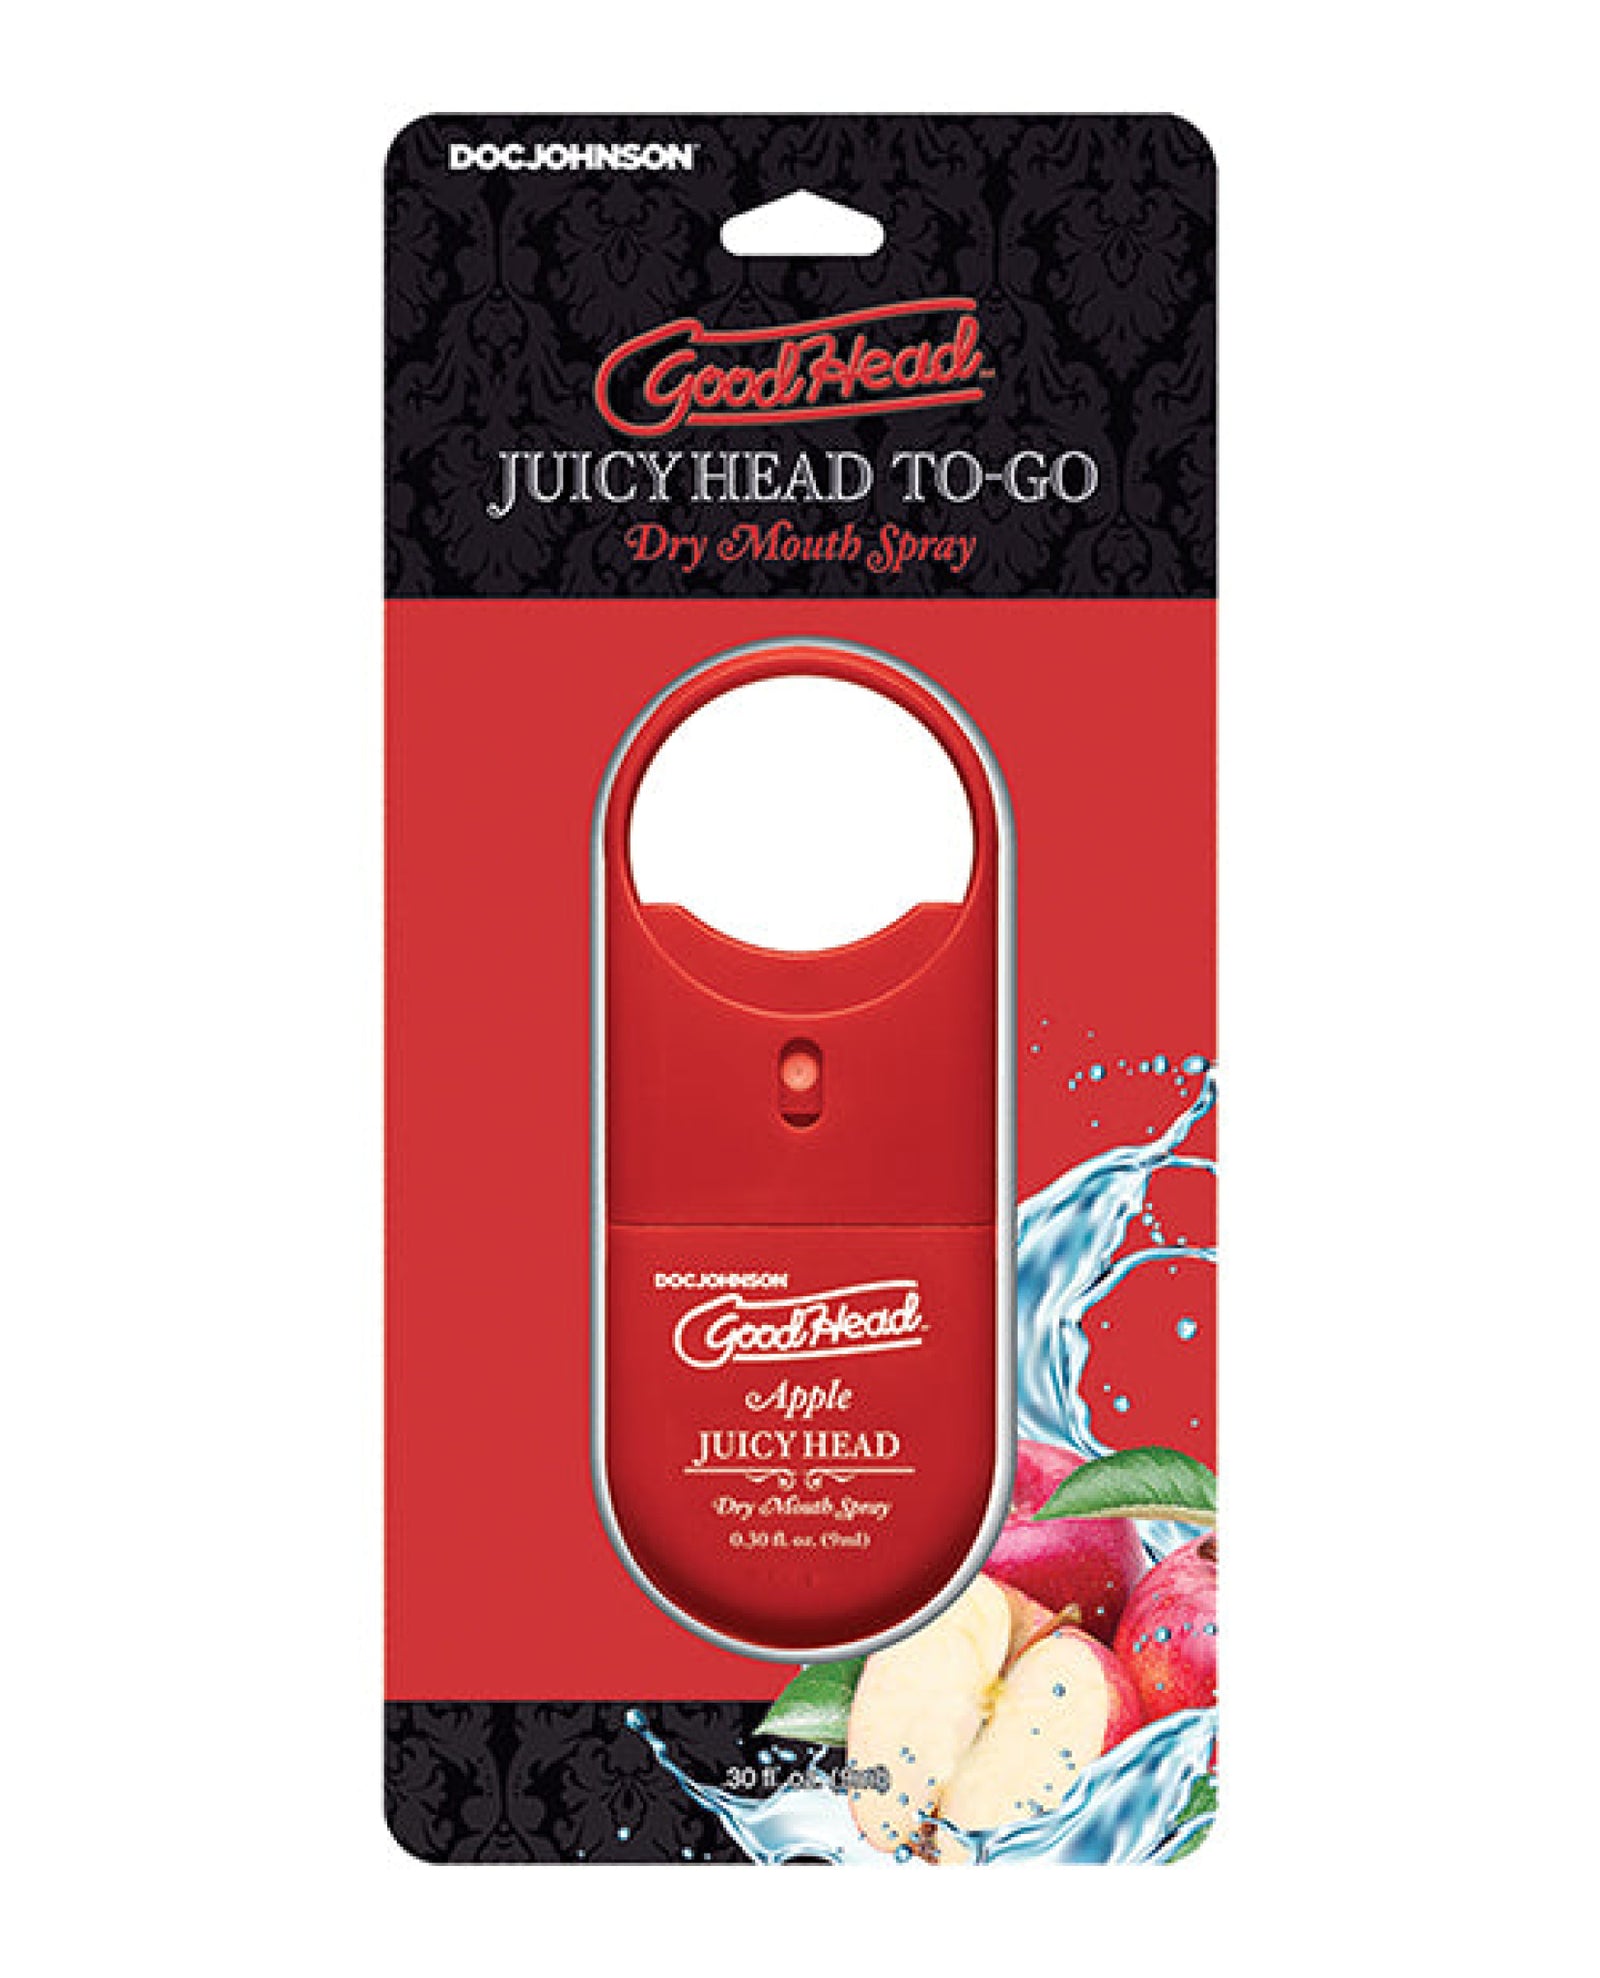 Goodhead Juicy Head Dry Mouth Spray To Go - .30 Oz Doc Johnson